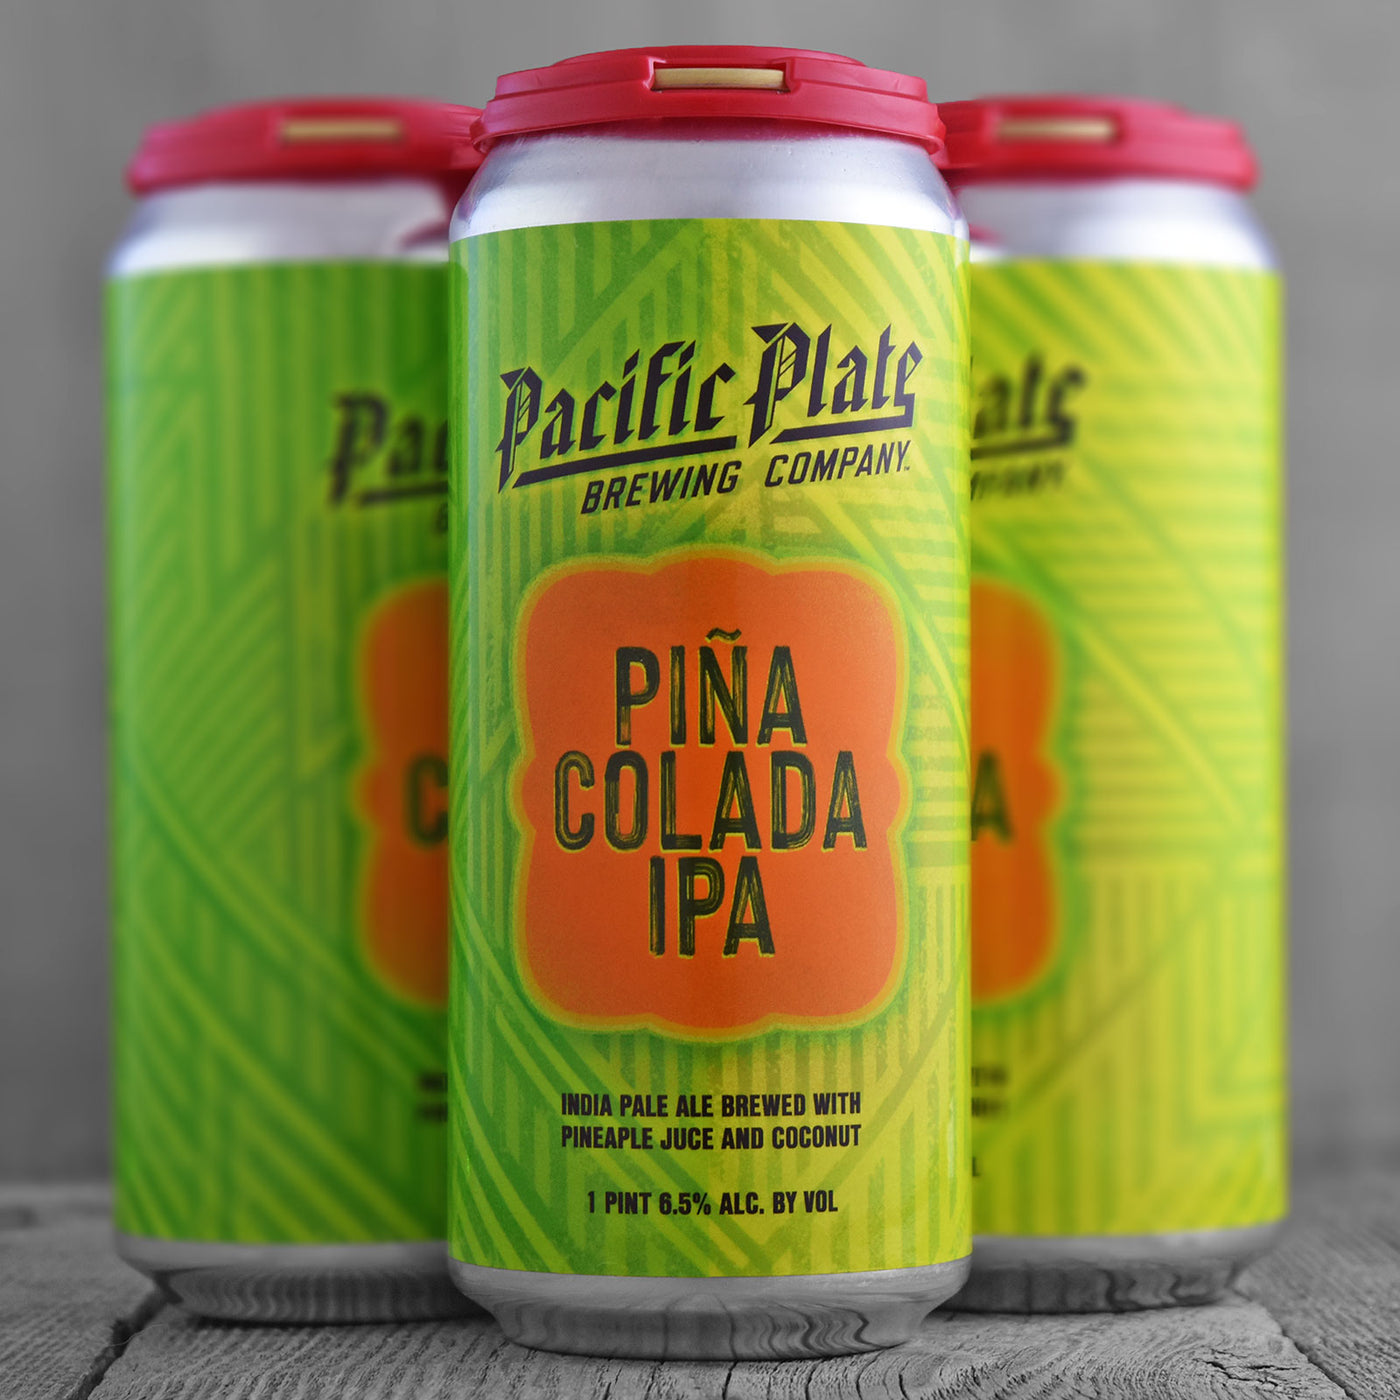 Pacific Plate Piña Colada IPA